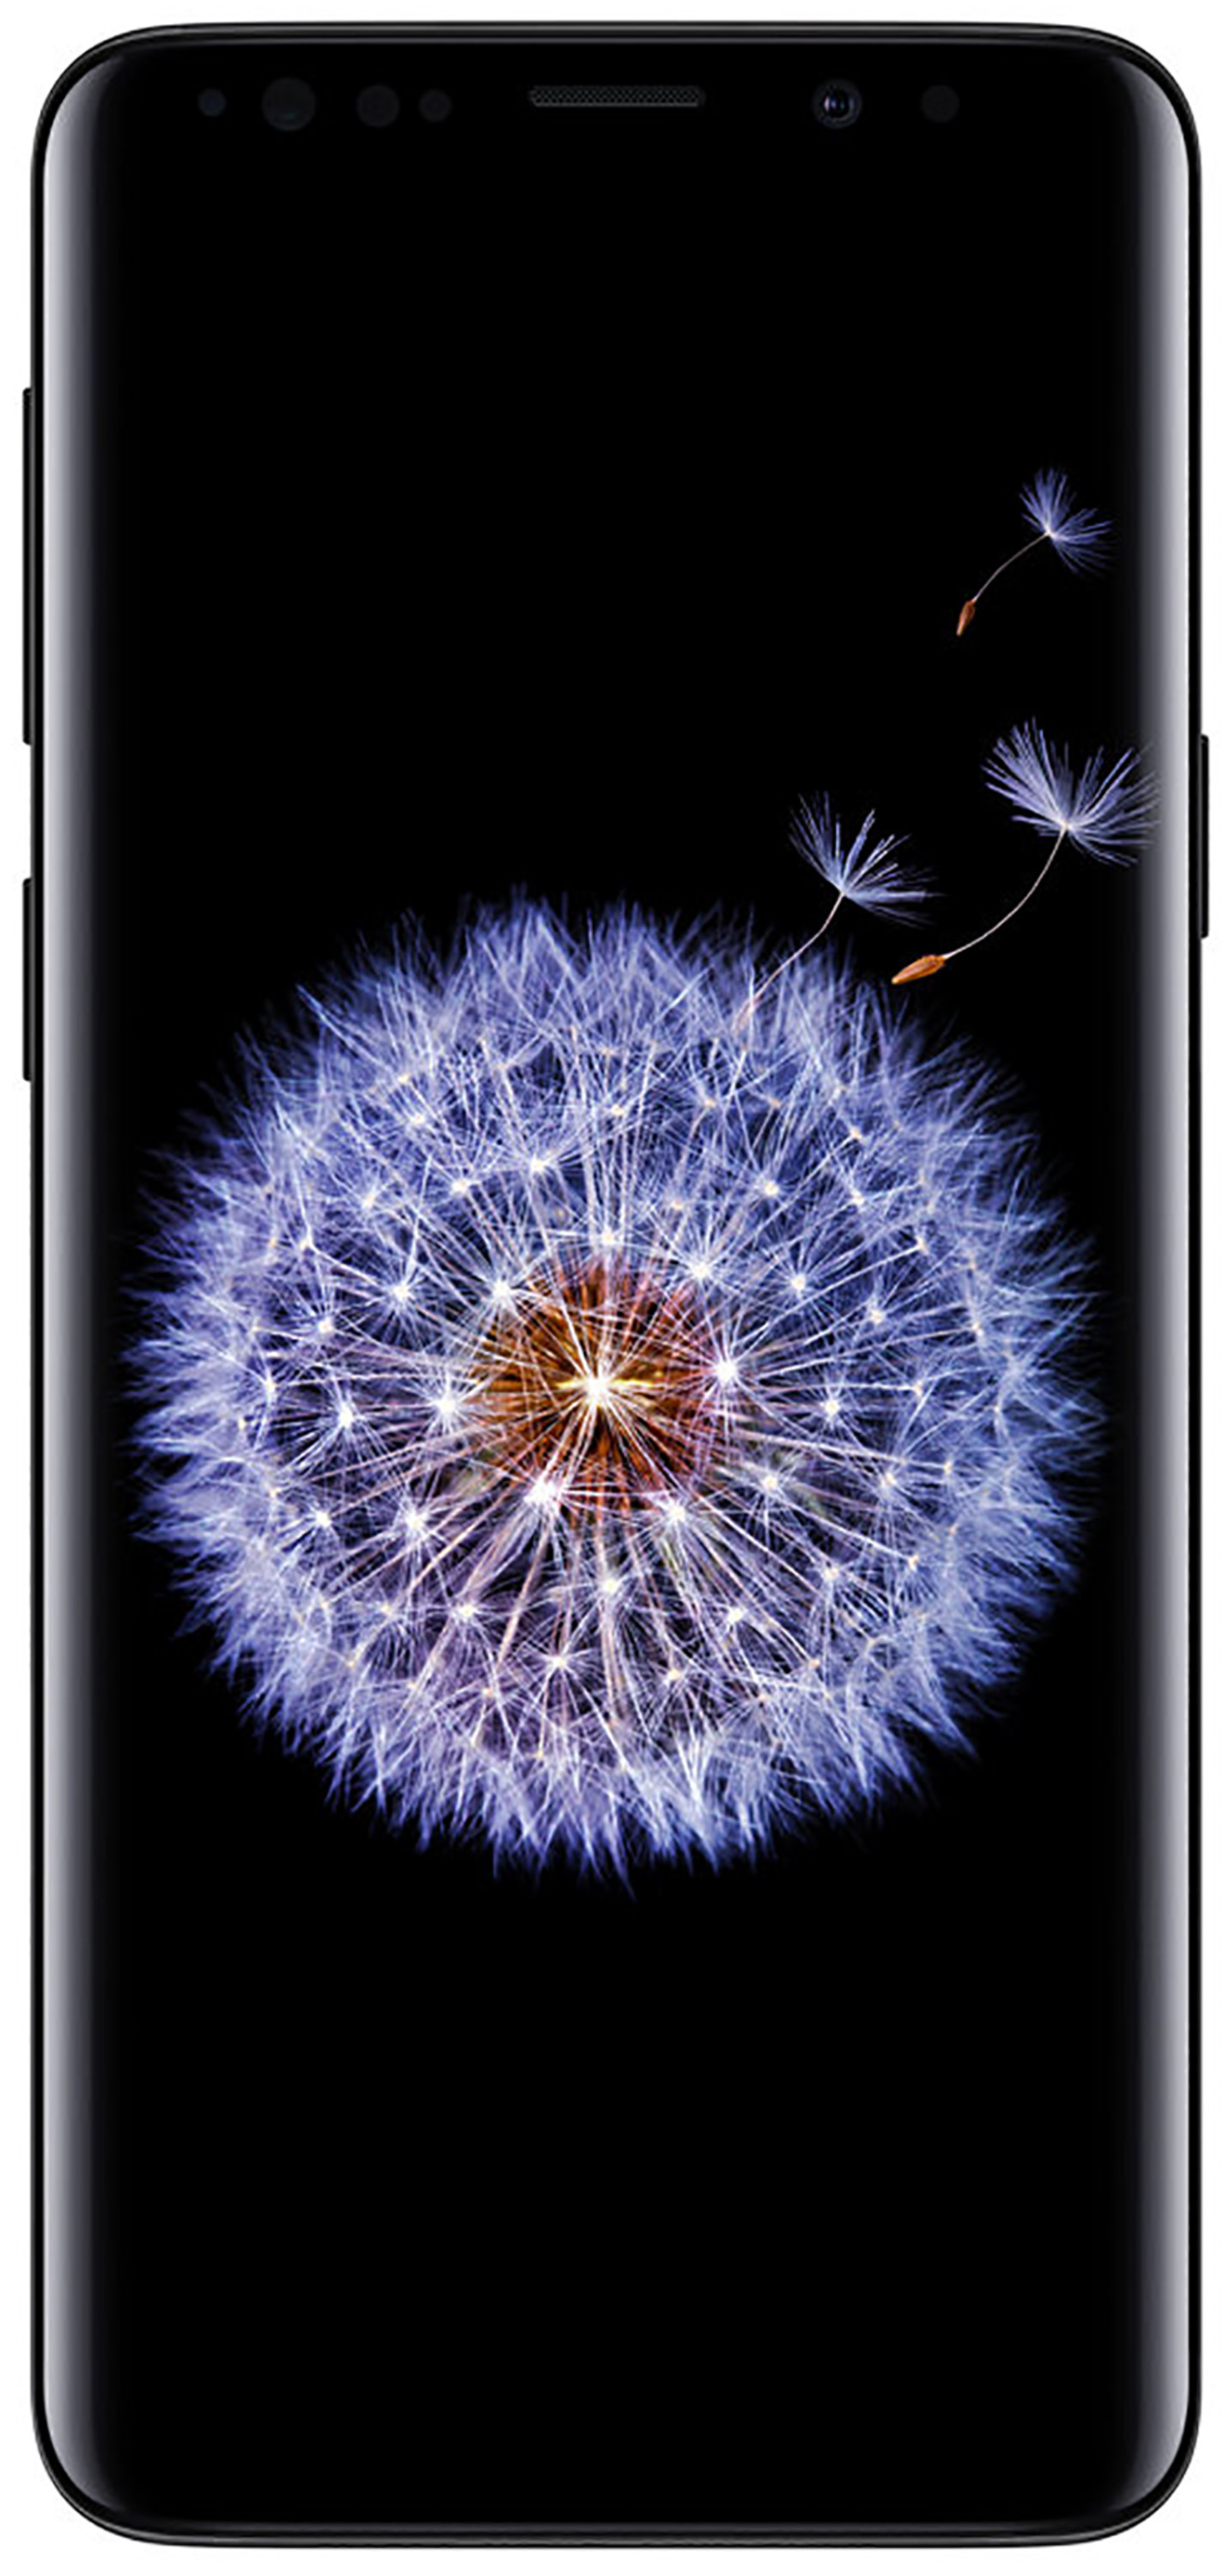 Restored SAMSUNG Galaxy S9 G960U 64GB Unlocked GSM/CDMA 4G LTE Phone with 12MP Camera (USA Version) - Midnight Black (Refurbished) - image 1 of 6